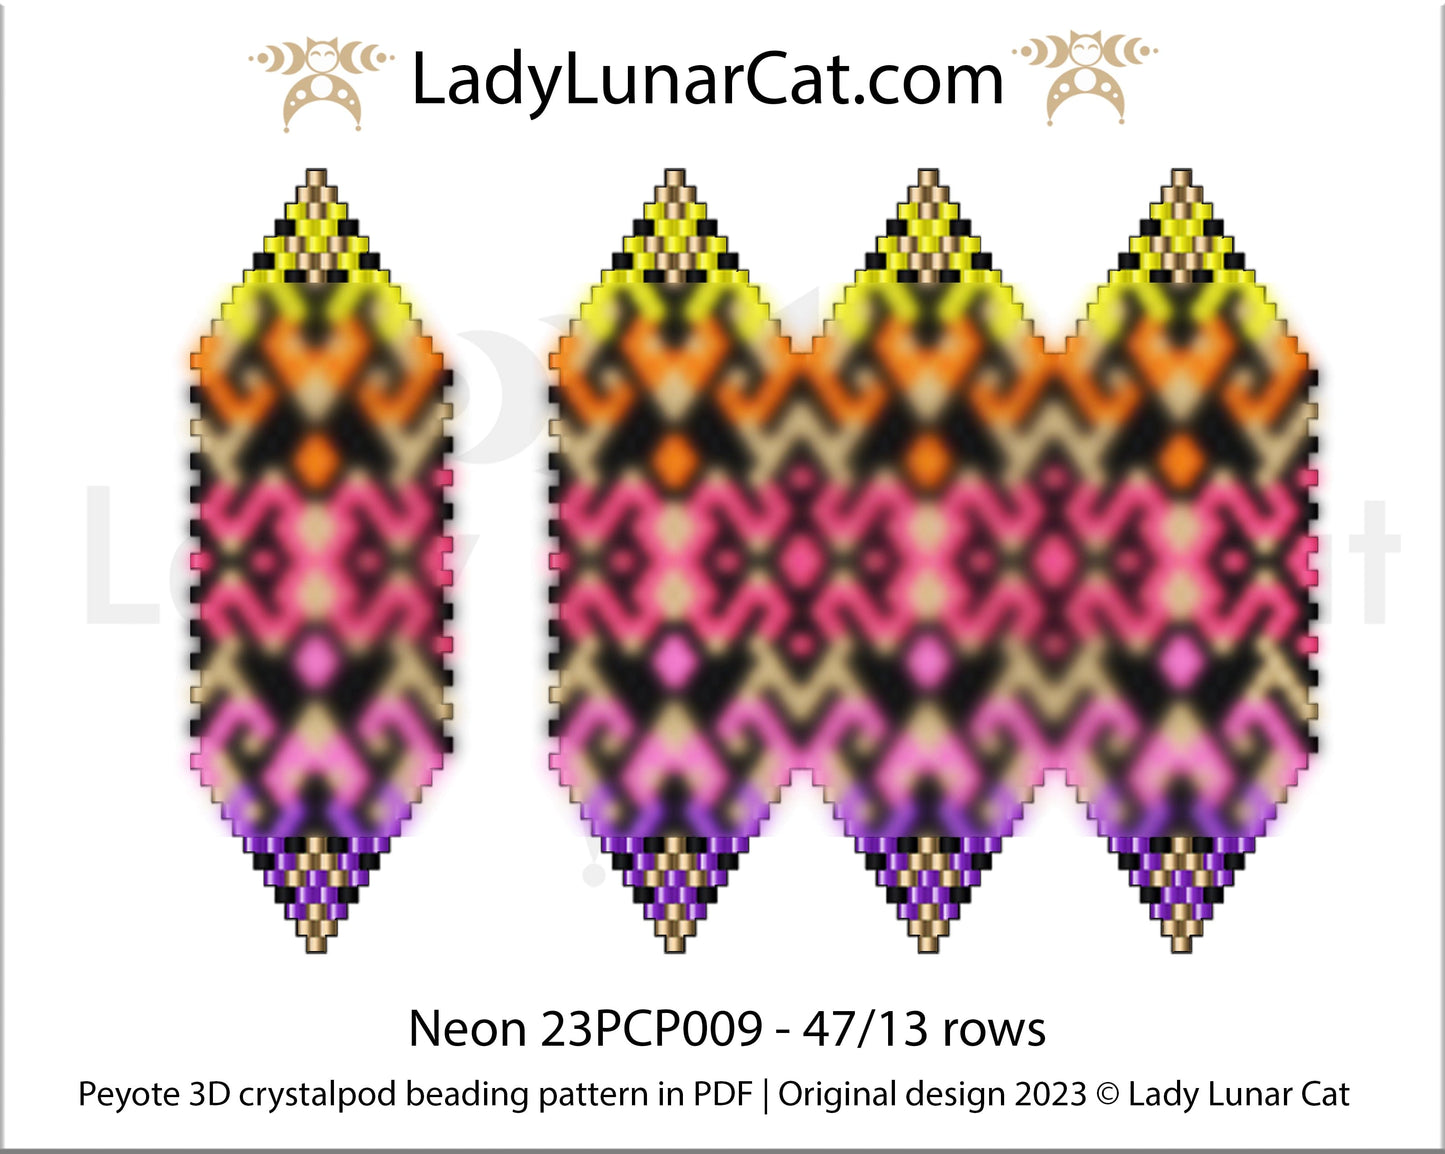 Peyote pod pattern or crystalpod pattern for beading LadyLunarCat